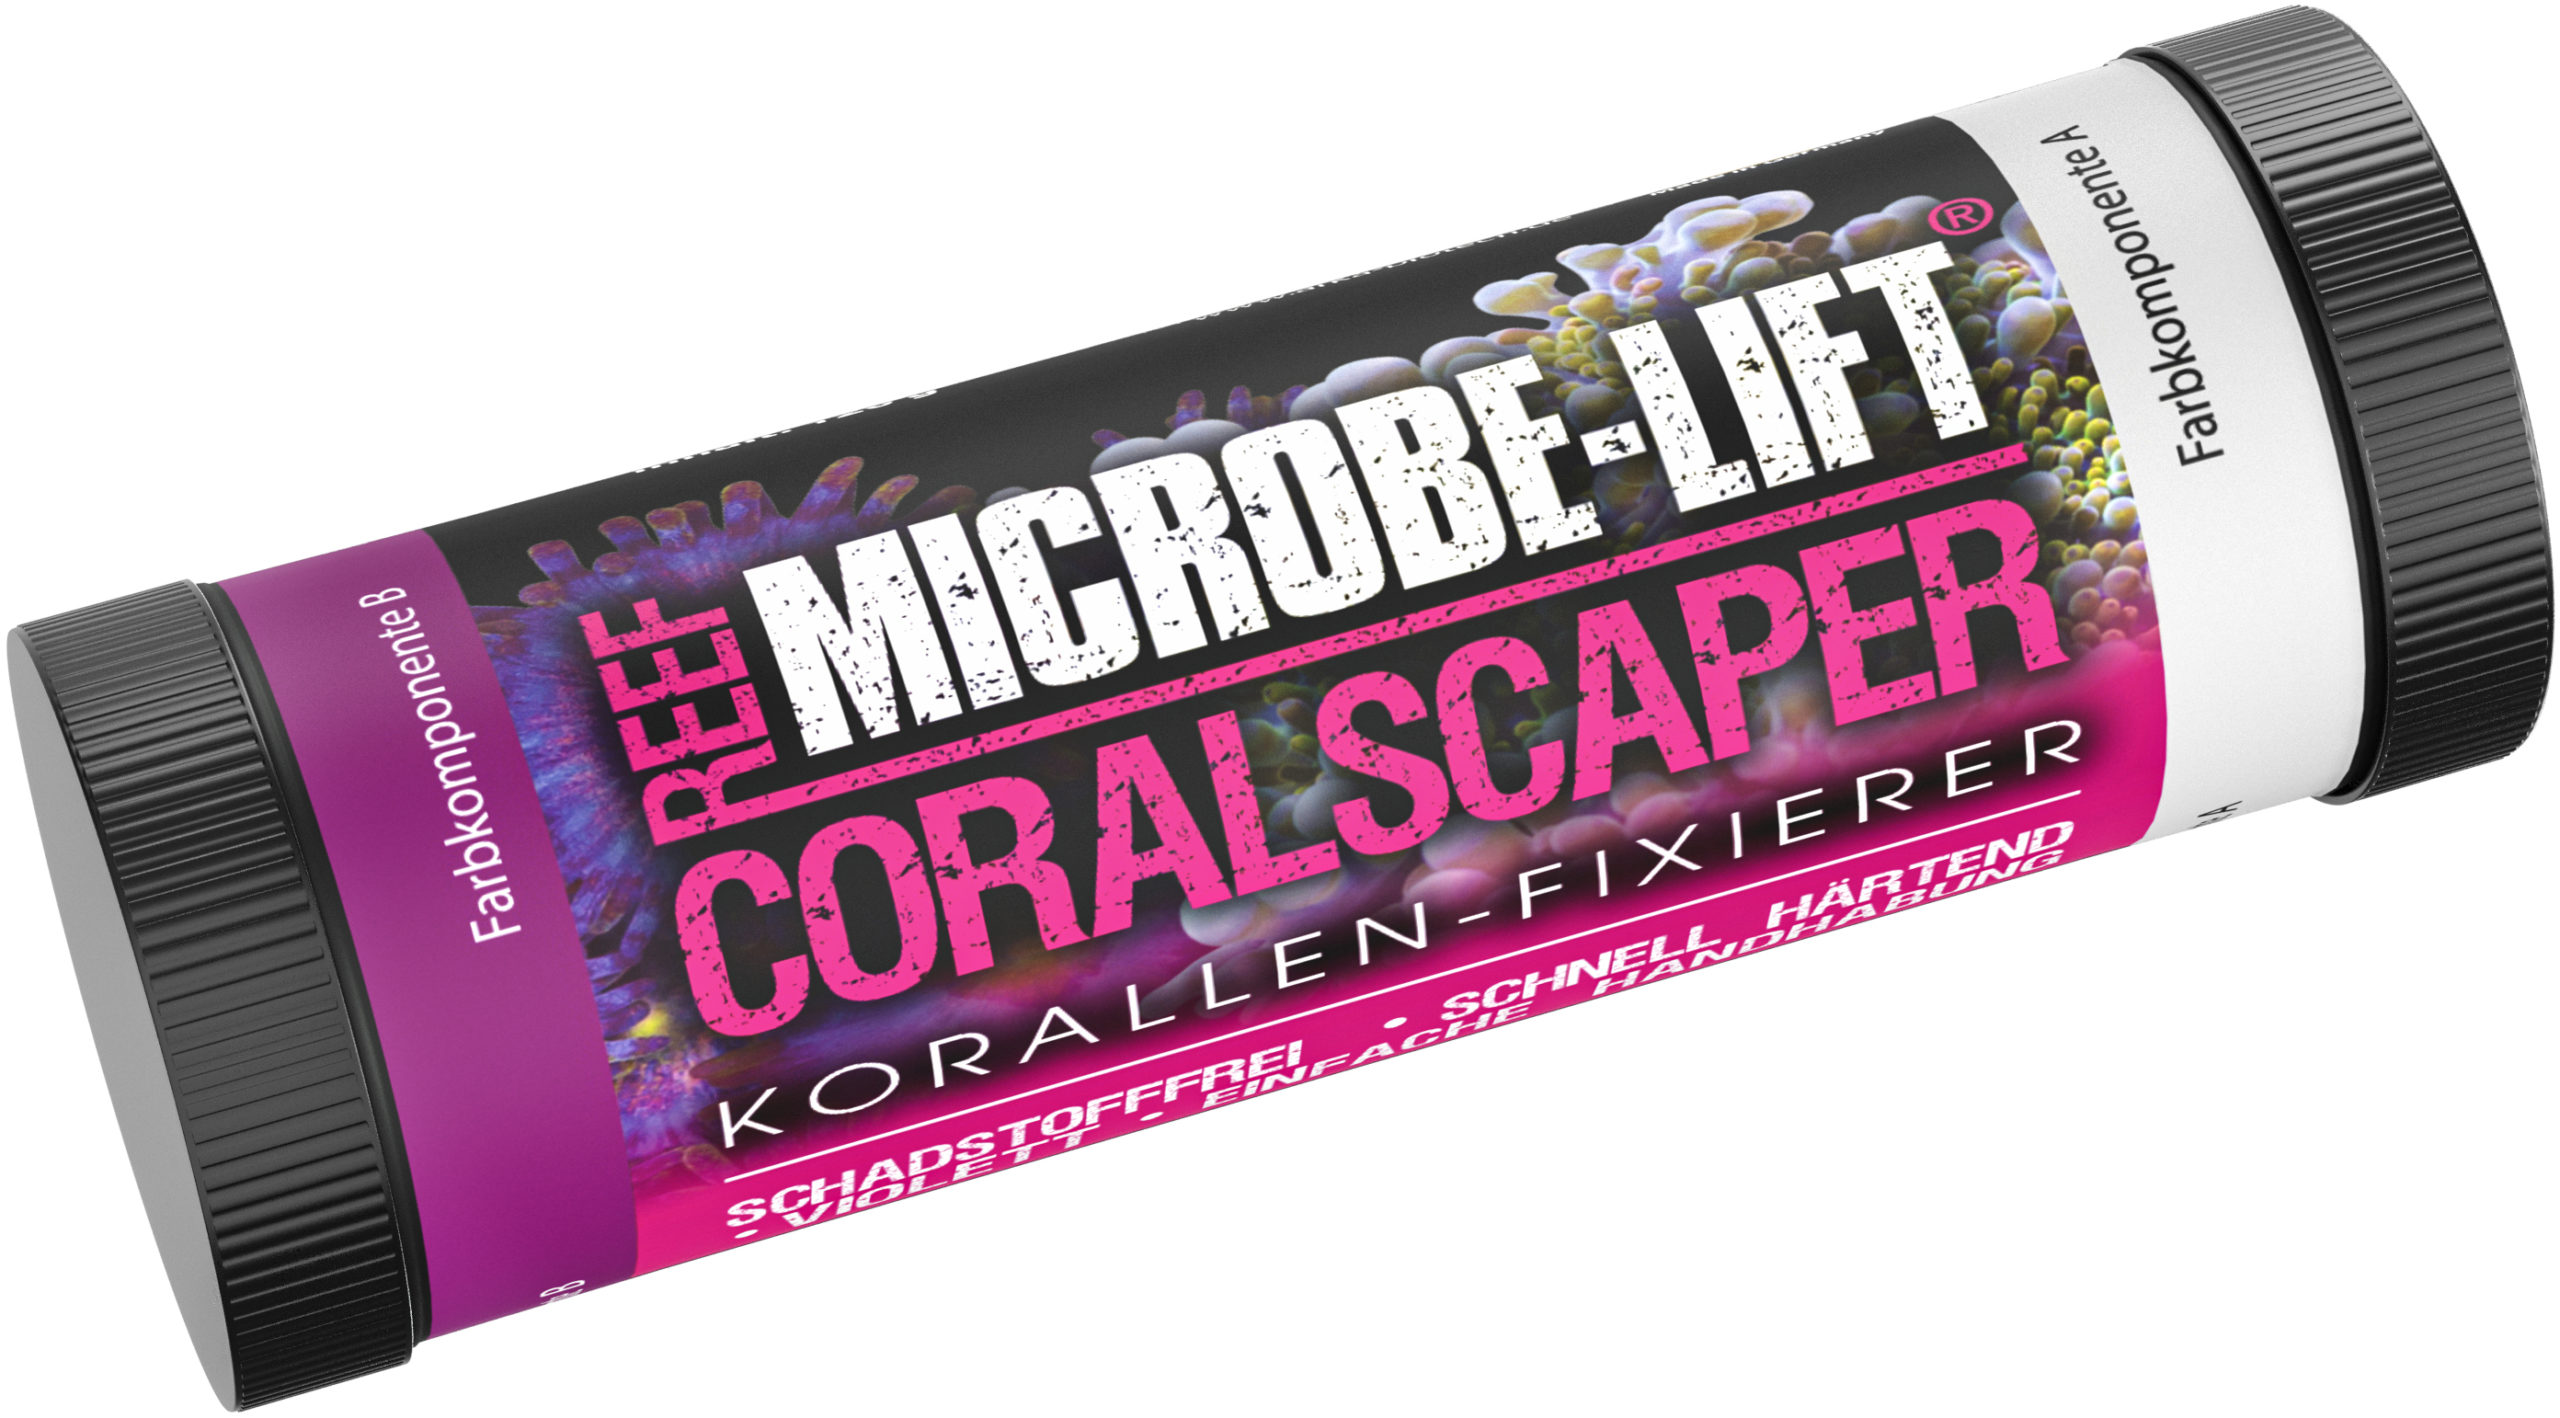 Microbe-Lift Coralscaper Sekundenkleber 50g